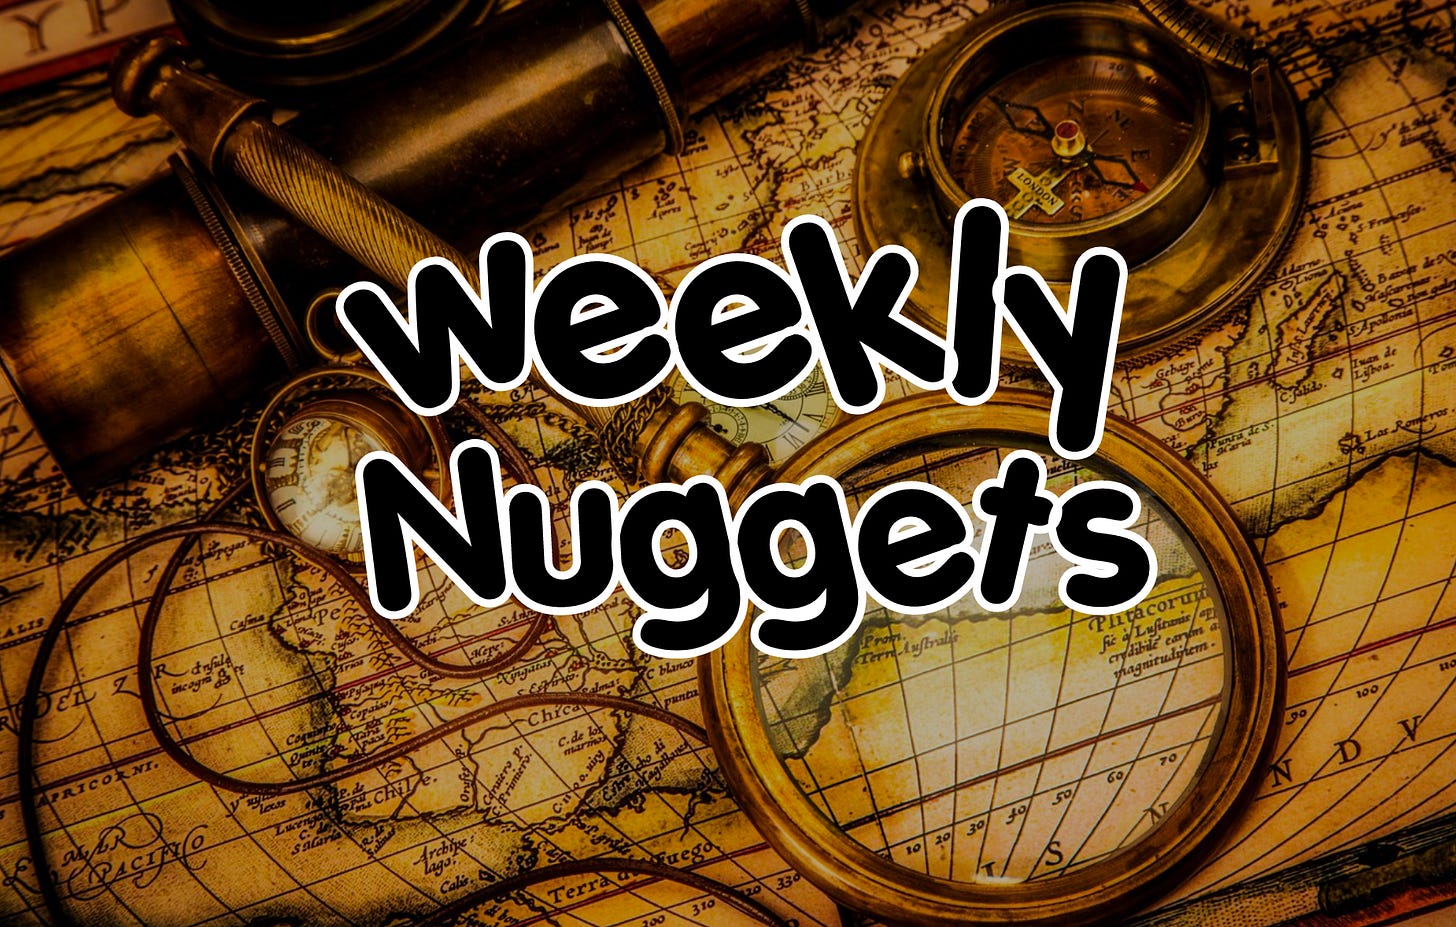 Weekly Nuggets | fueler.io